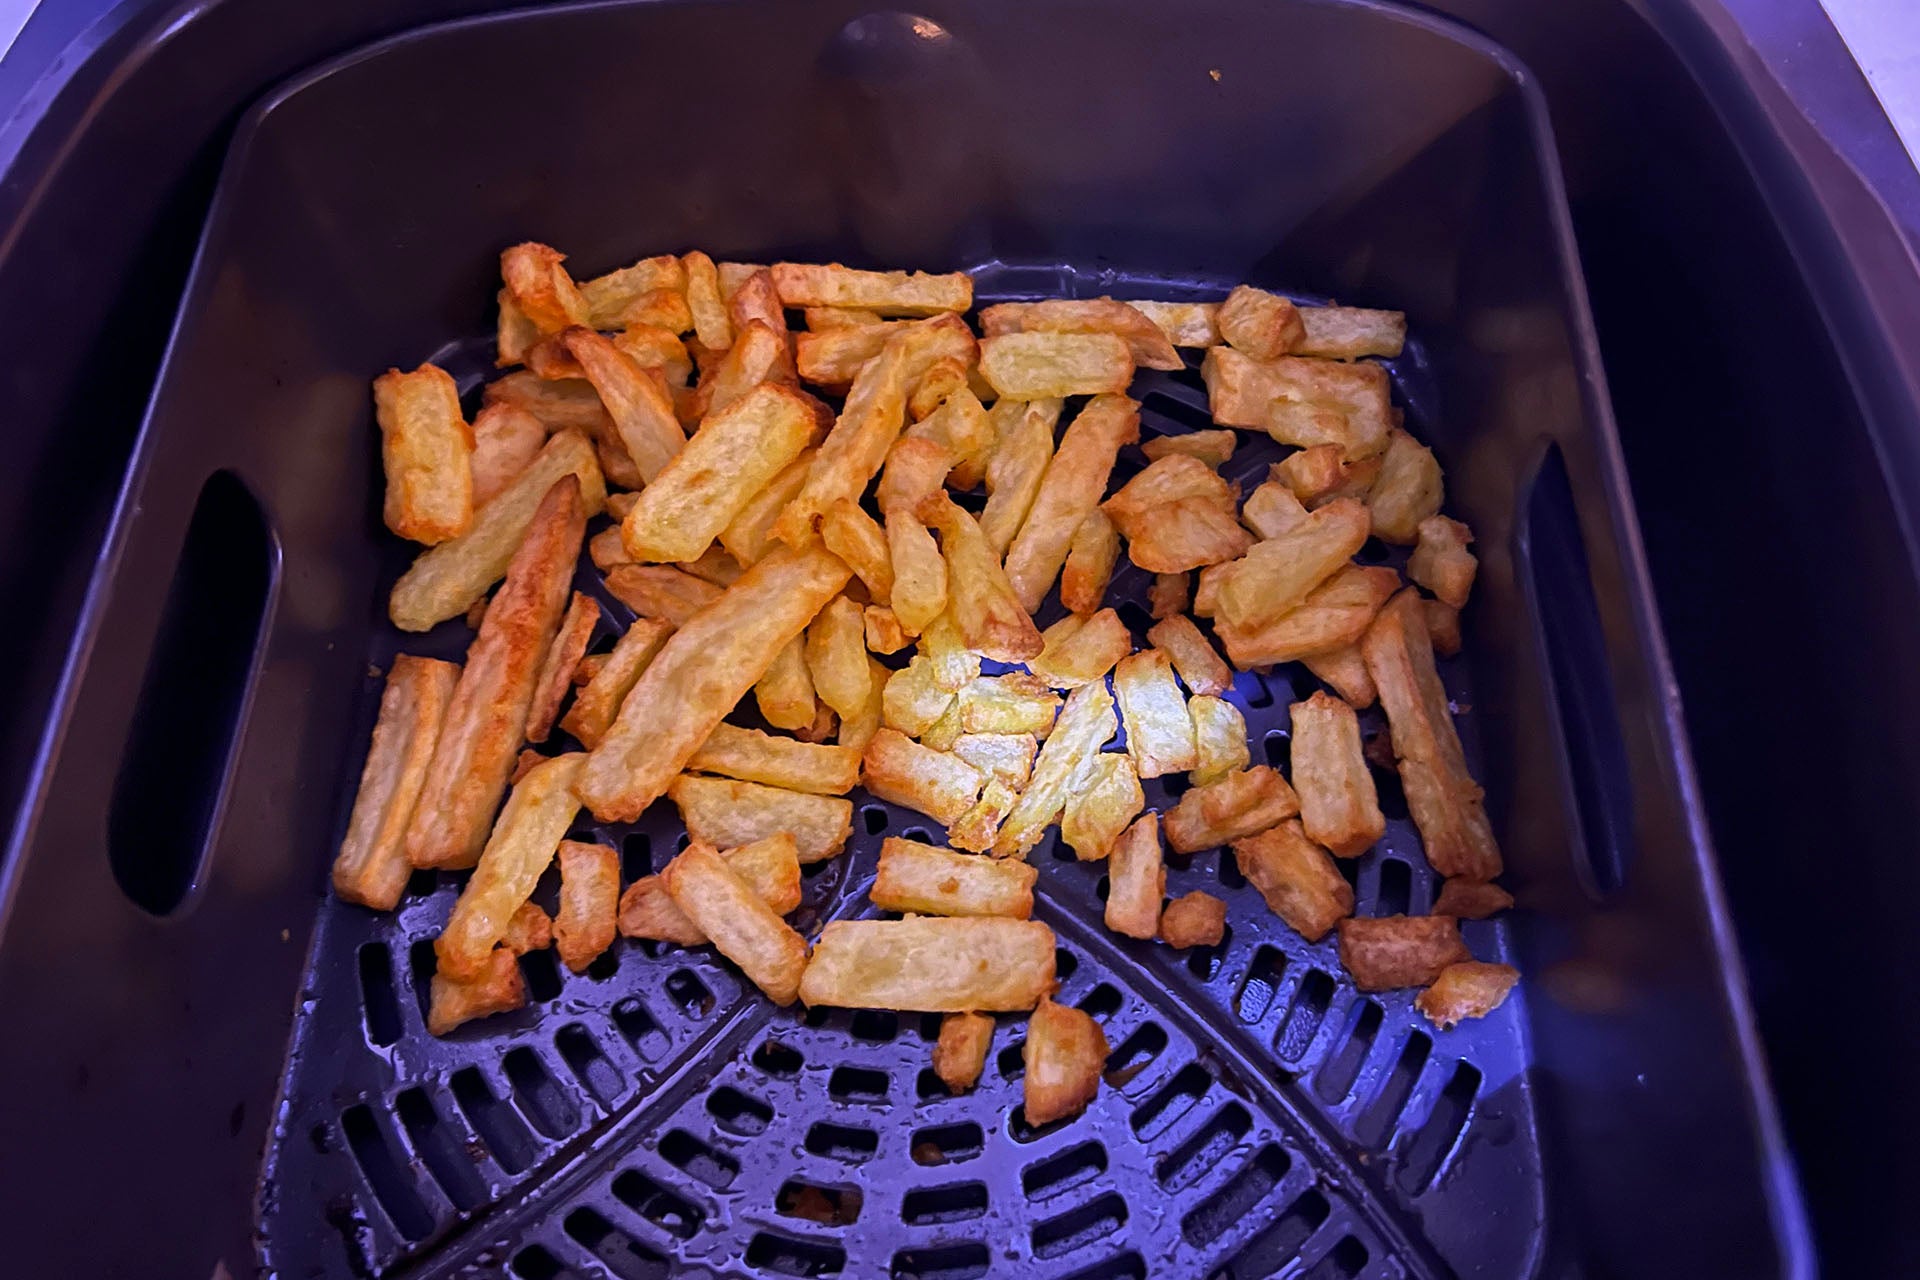 Final chips in air fryer